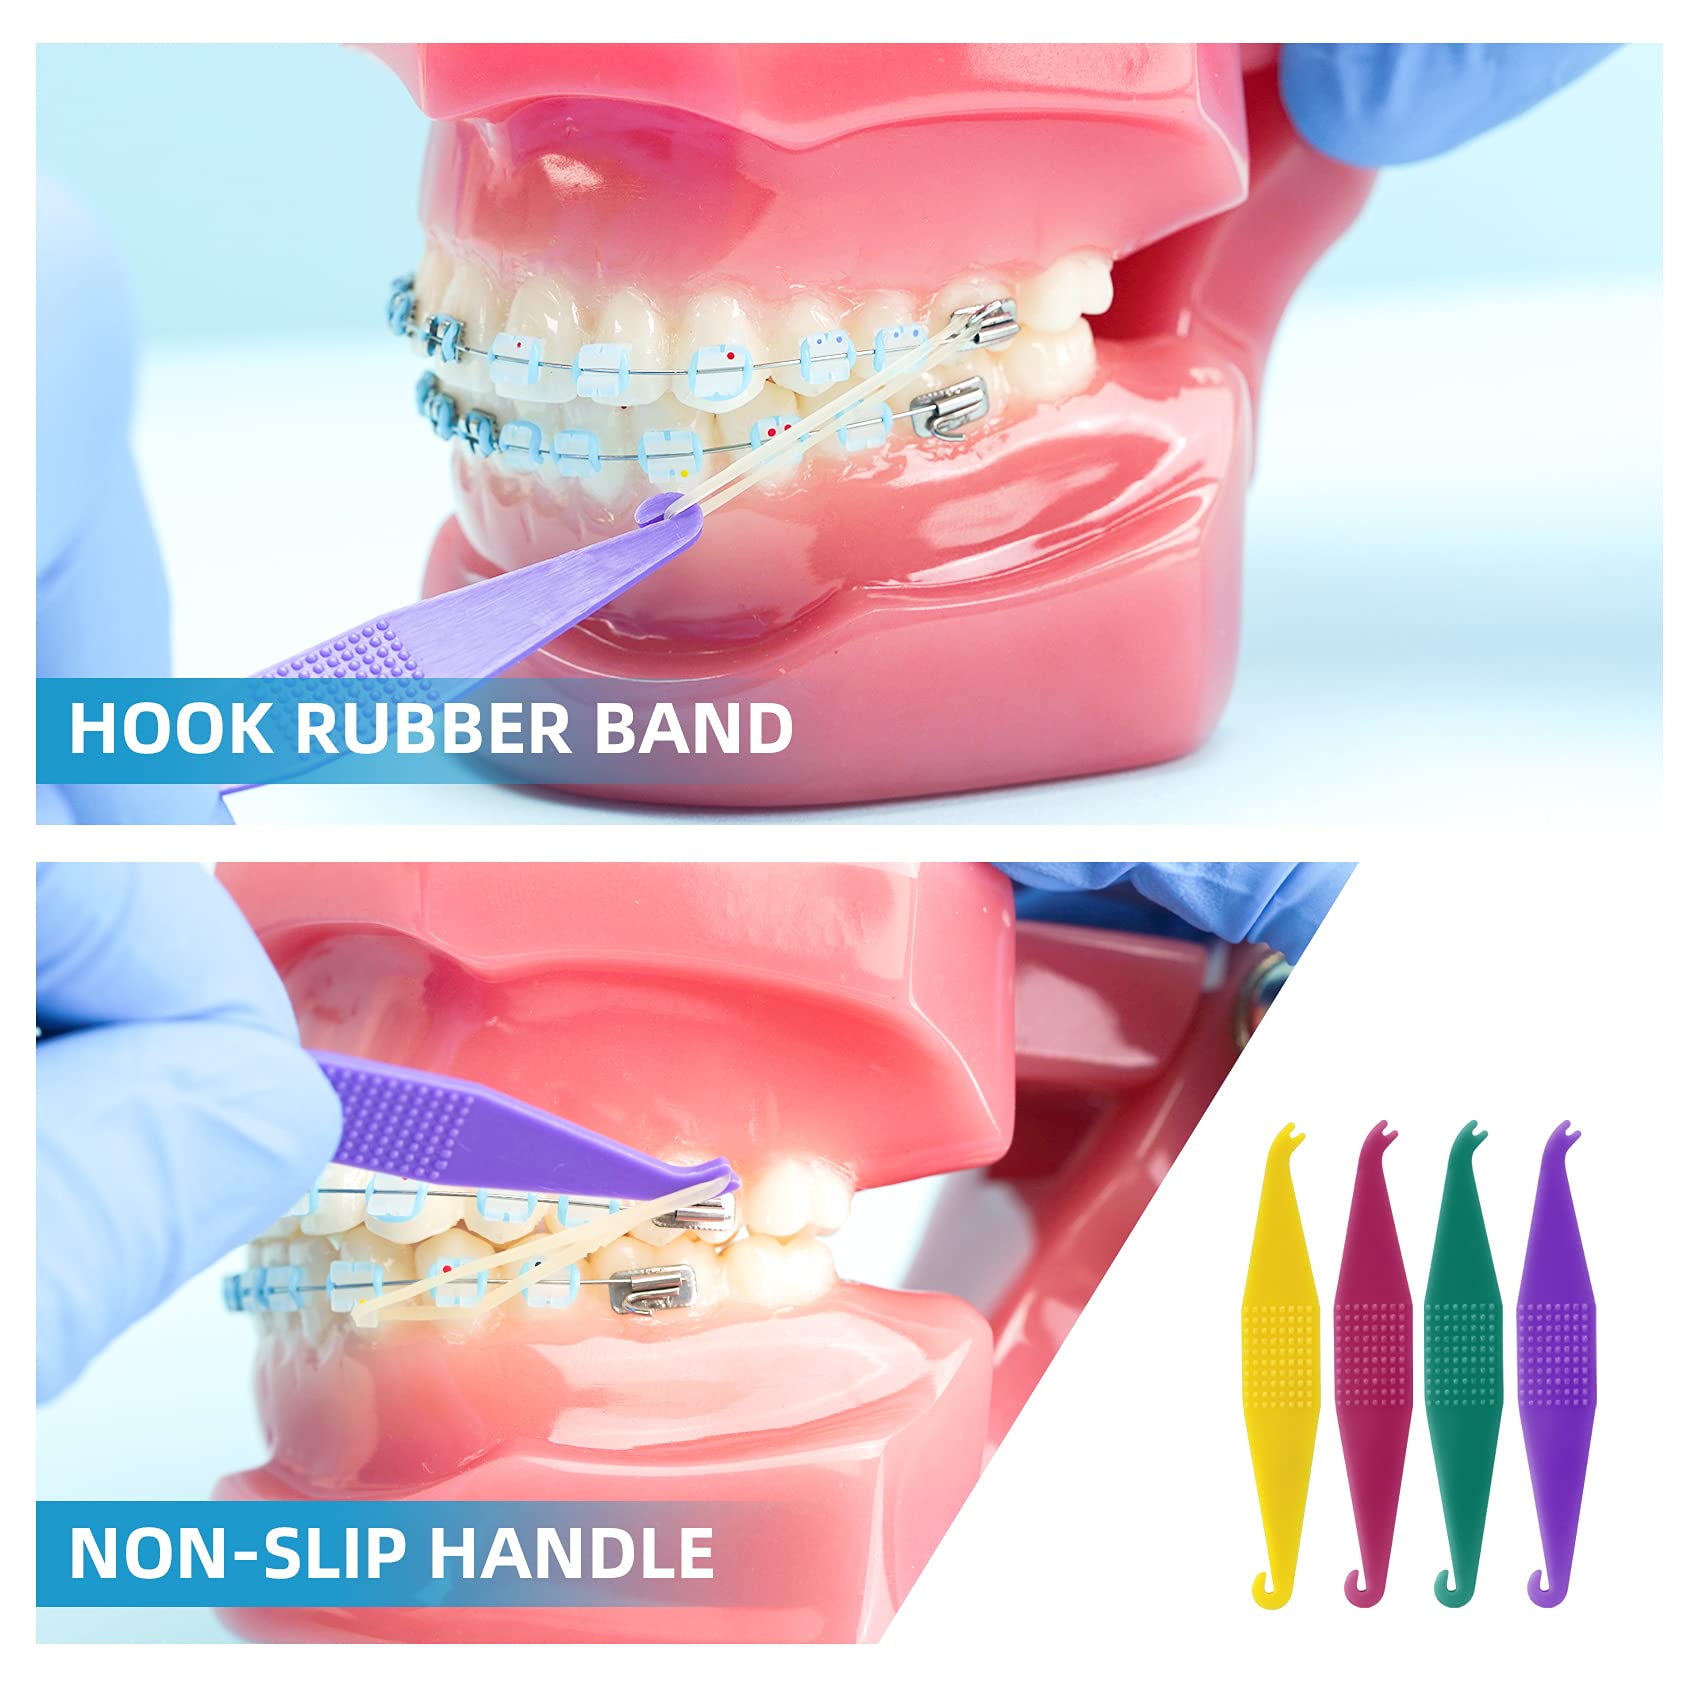 About Rubber Bands for Braces - Biermann Orthodontics